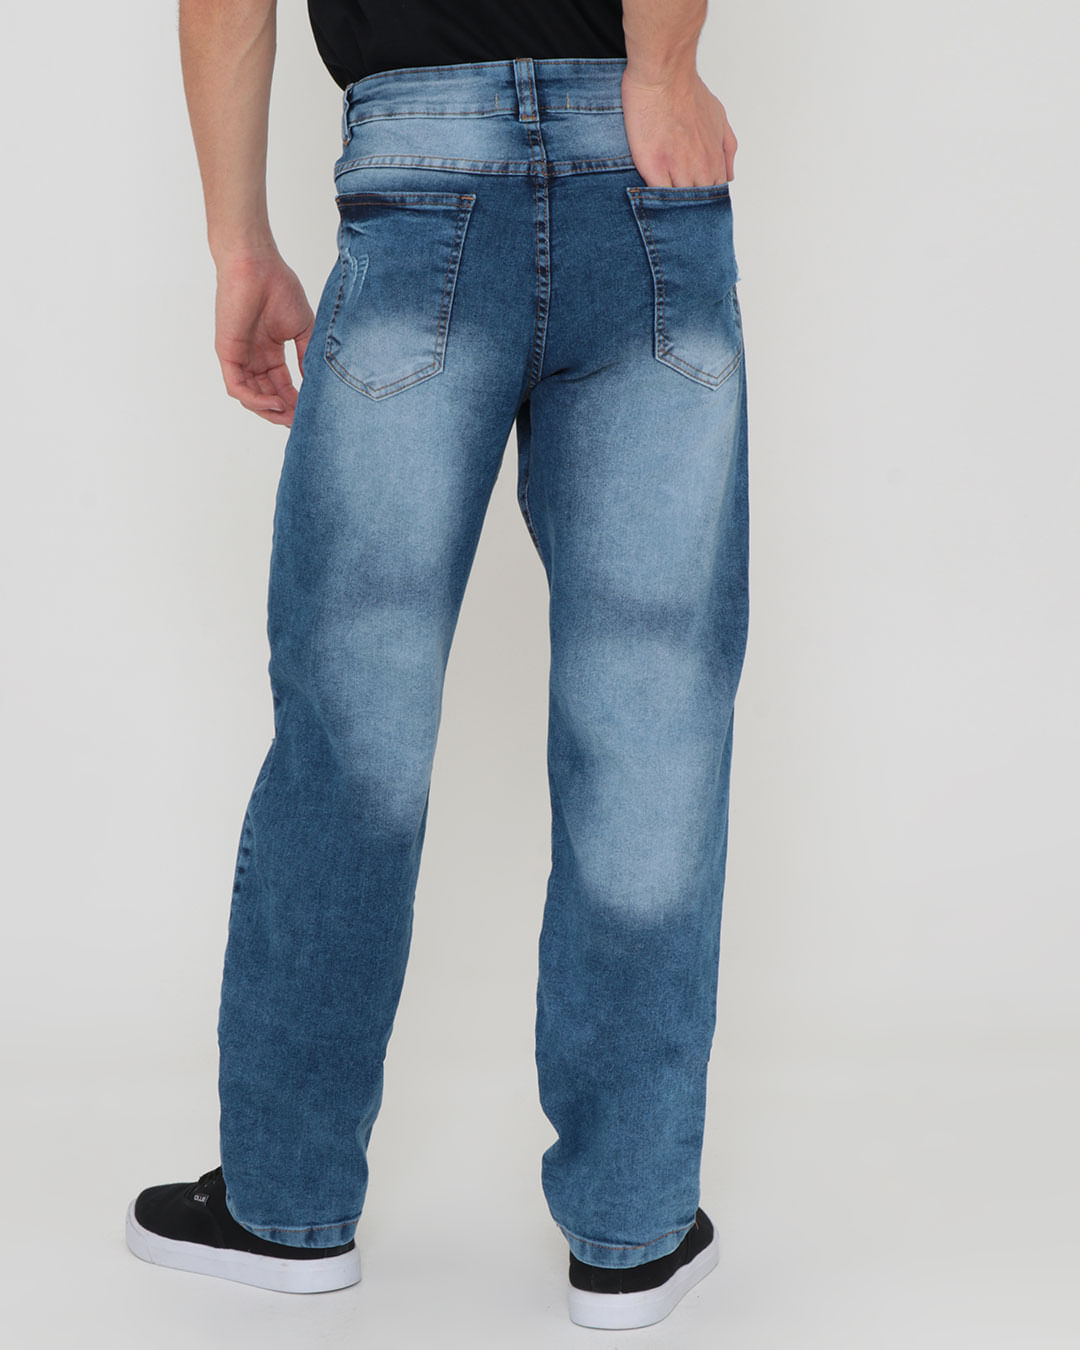 23121000964045-blue-jeans-medio-3